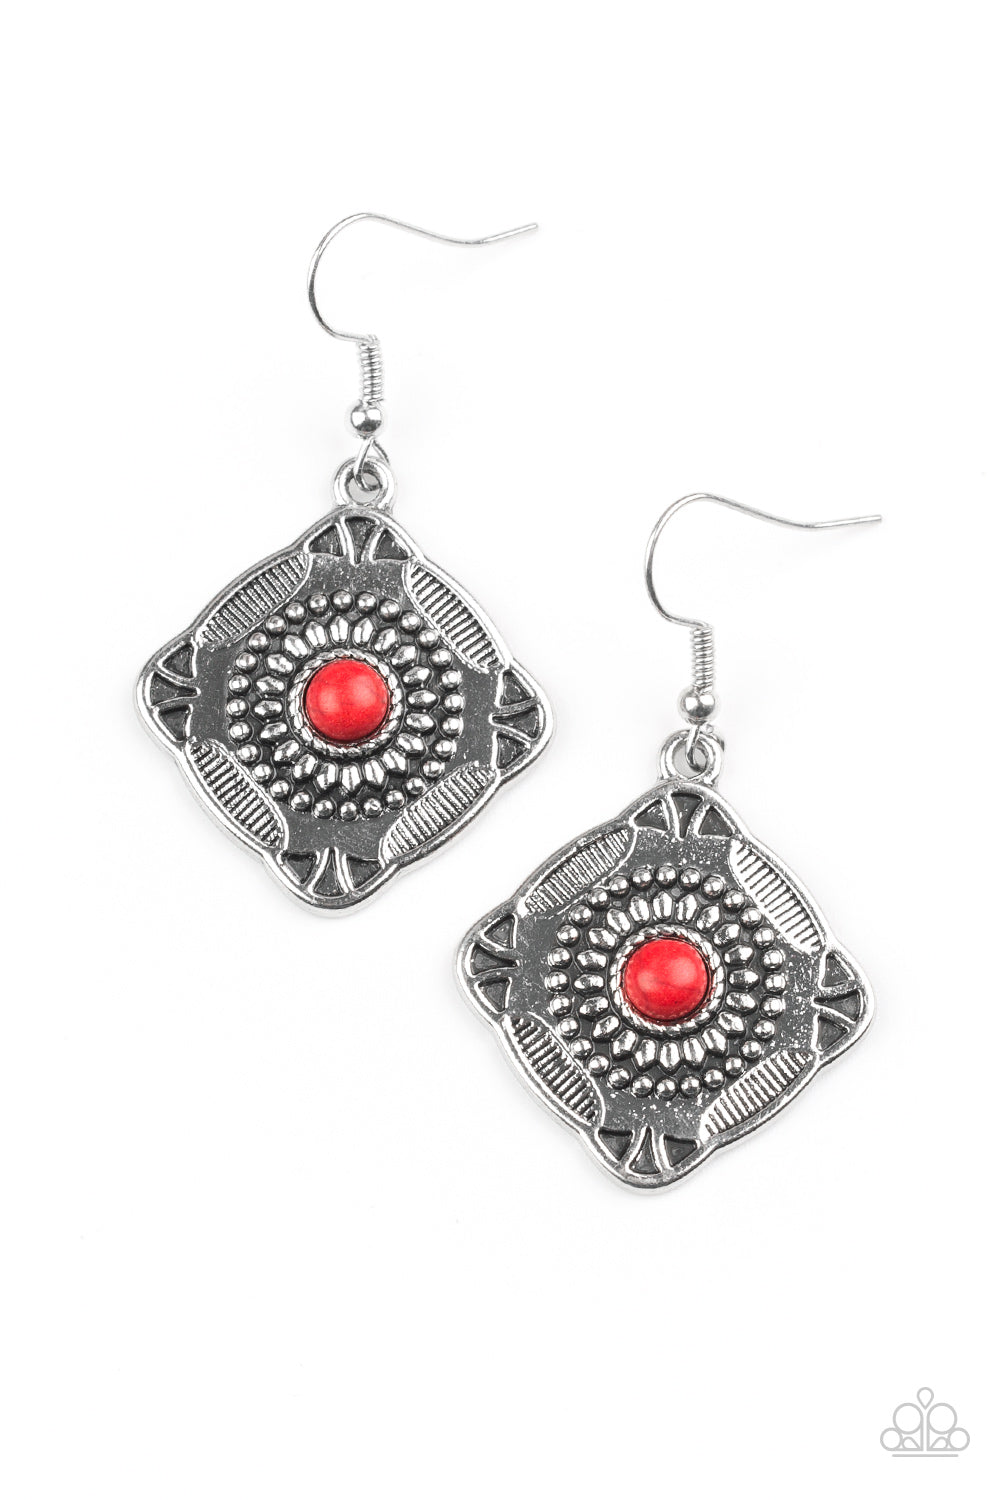 Paparazzi Fiercely Four Corners - Red Stone - Silver Earrings - $5 Jewelry With Ashley Swint